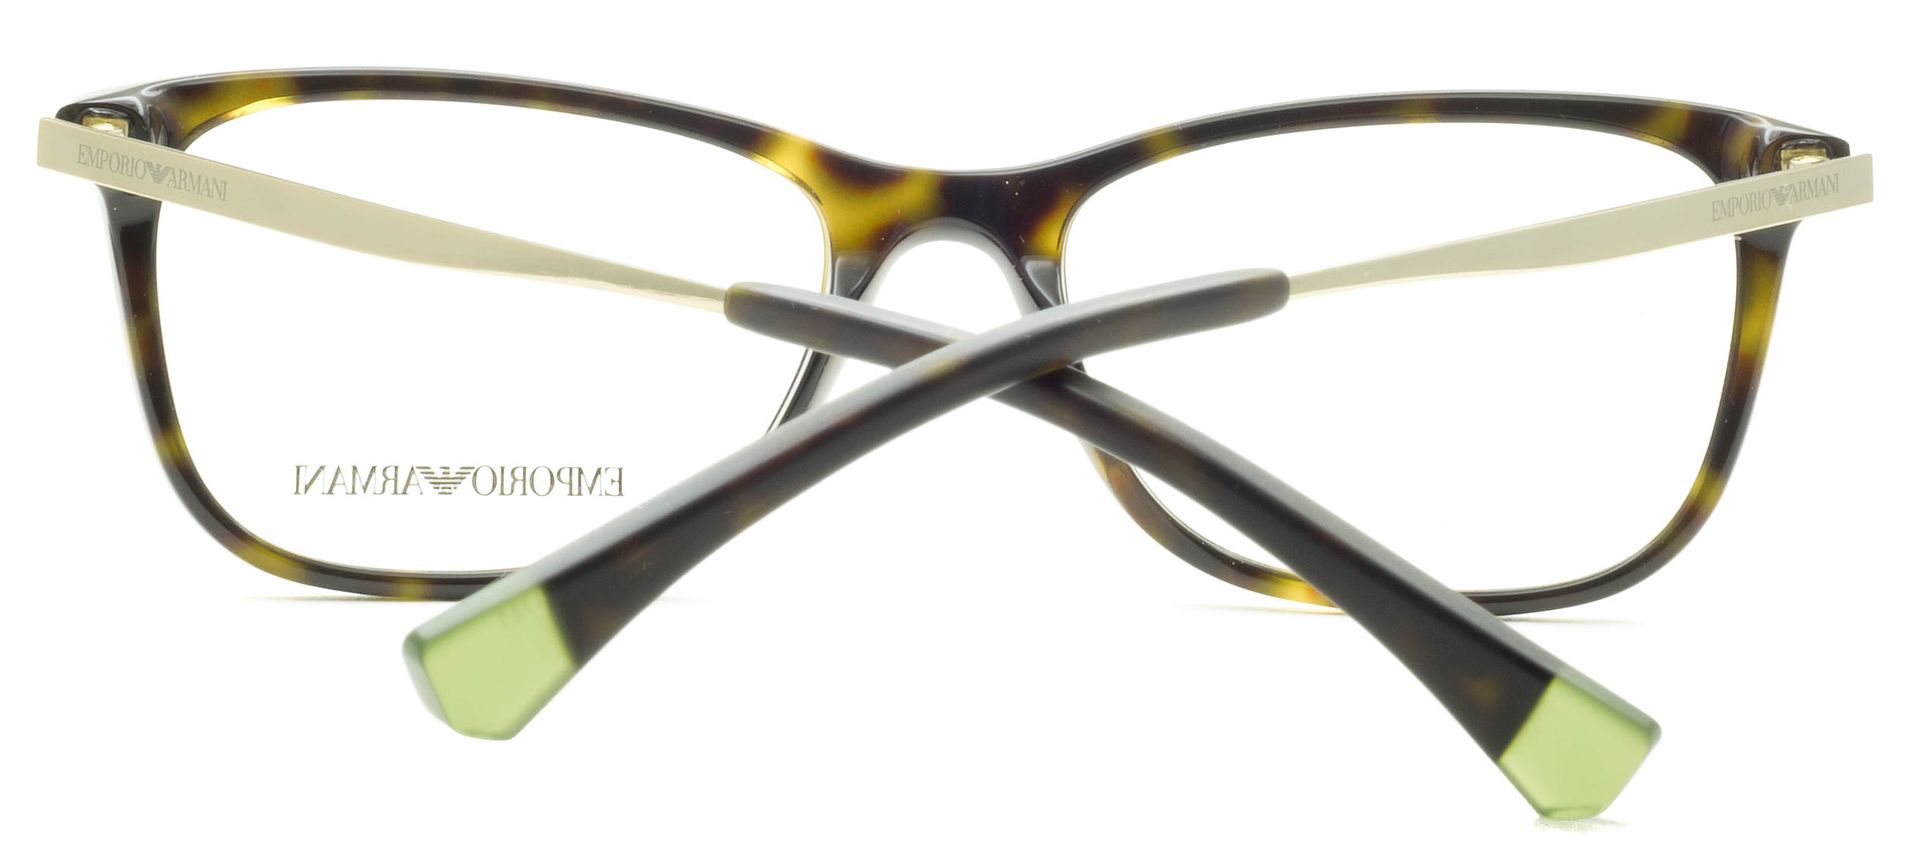 EMPORIO ARMANI EA 3119 5089 Eyewear FRAMES RX Optical Glasses